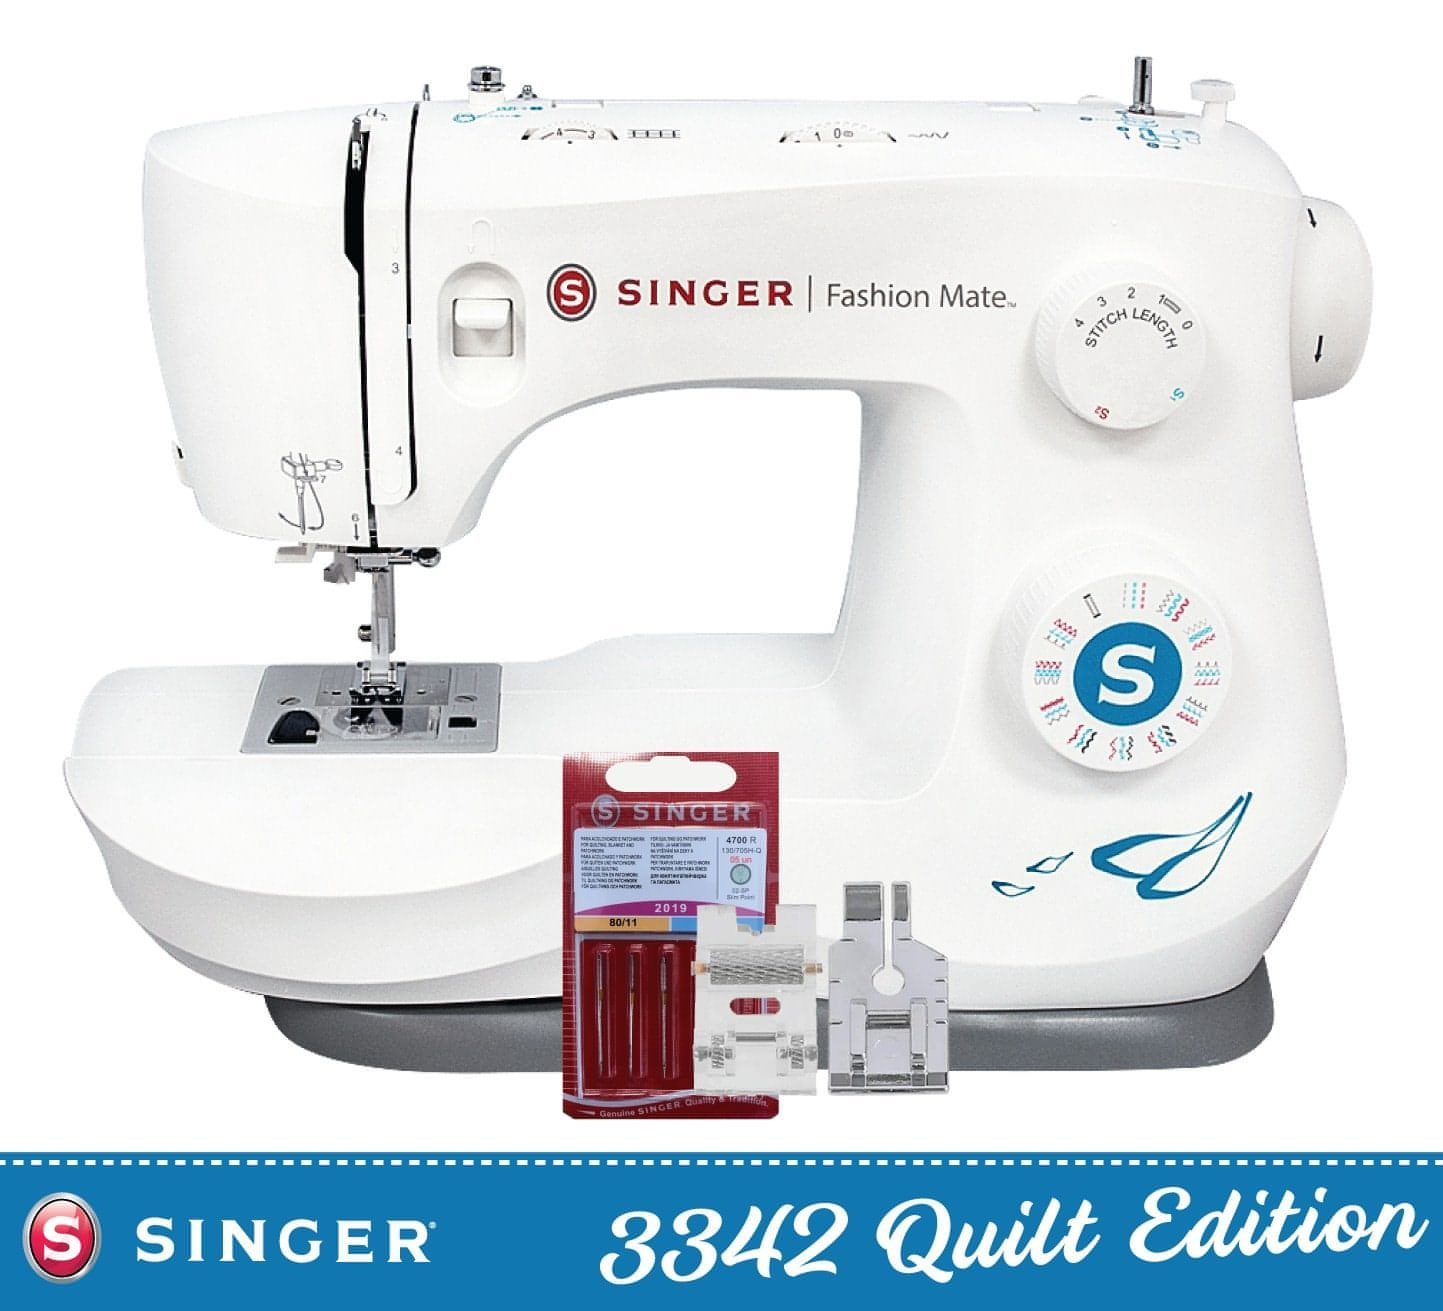 Singer 3342 Quilt Edition Sewing Machine